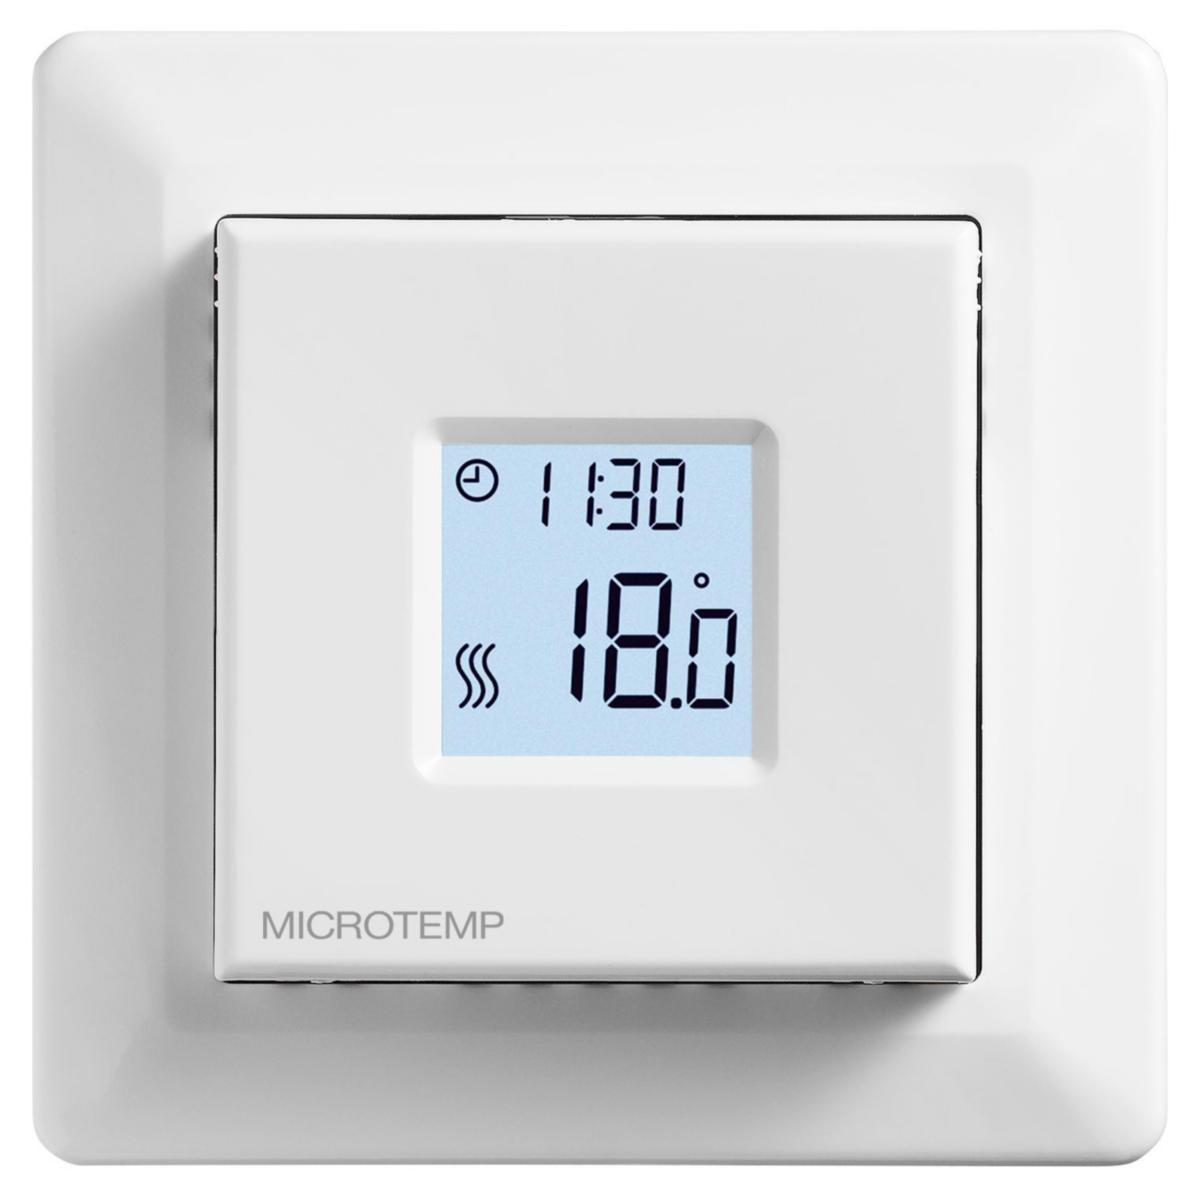 afsked klap tragt Termostat mtc4 microtemp hvit - termostat mtc4 microtemp...